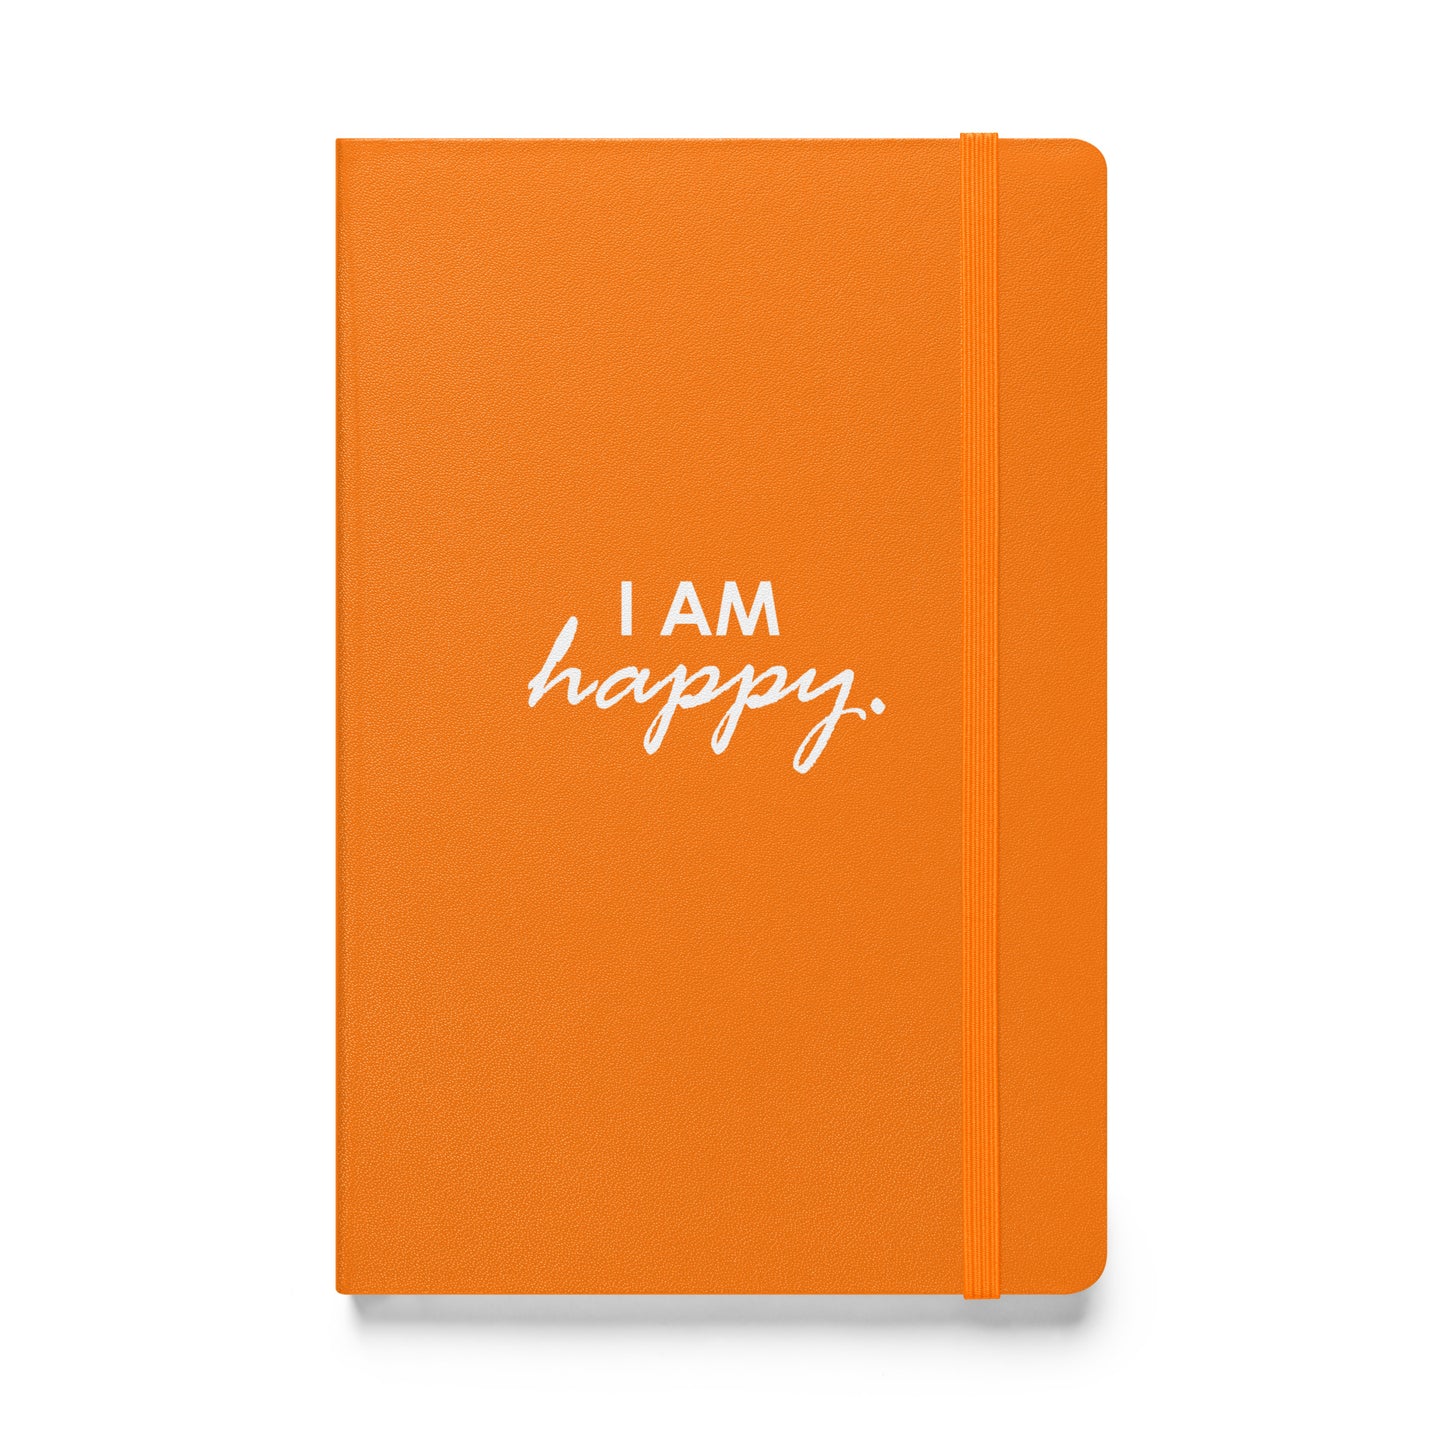 I AM HAPPY - Hardcover bound notebook $ FREE Affirmation Digital Download